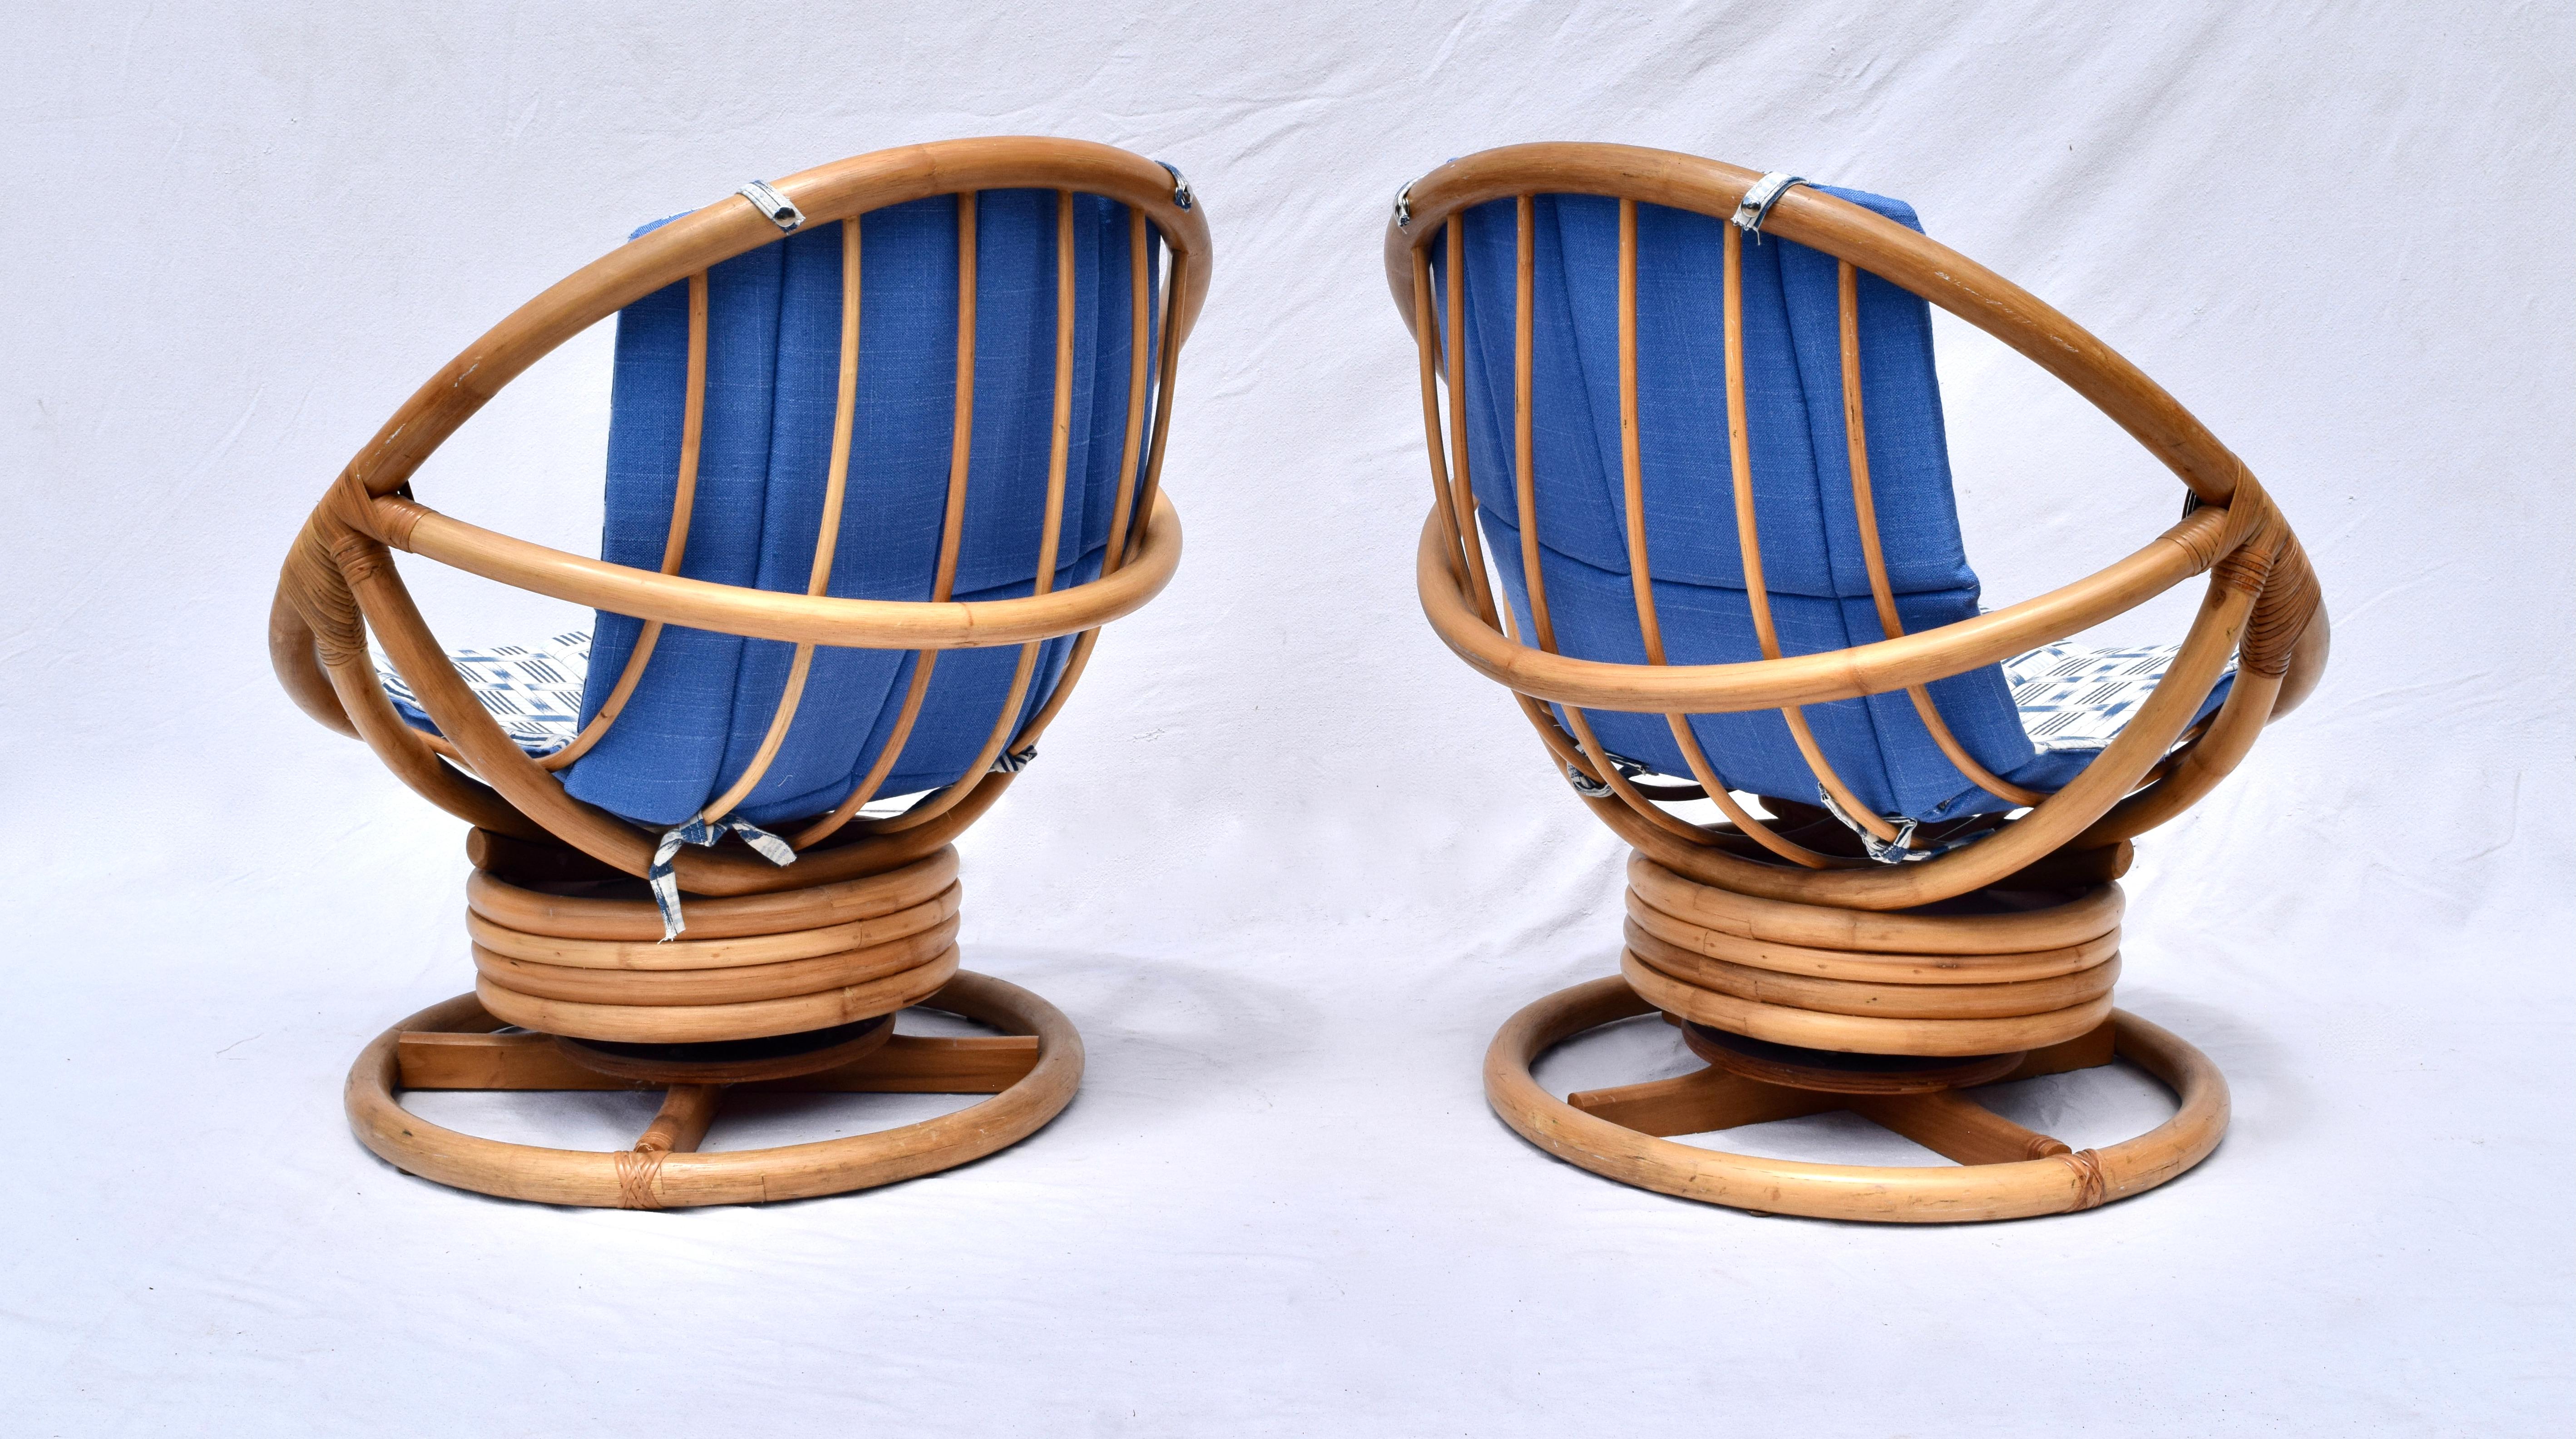 saucer rocking chair